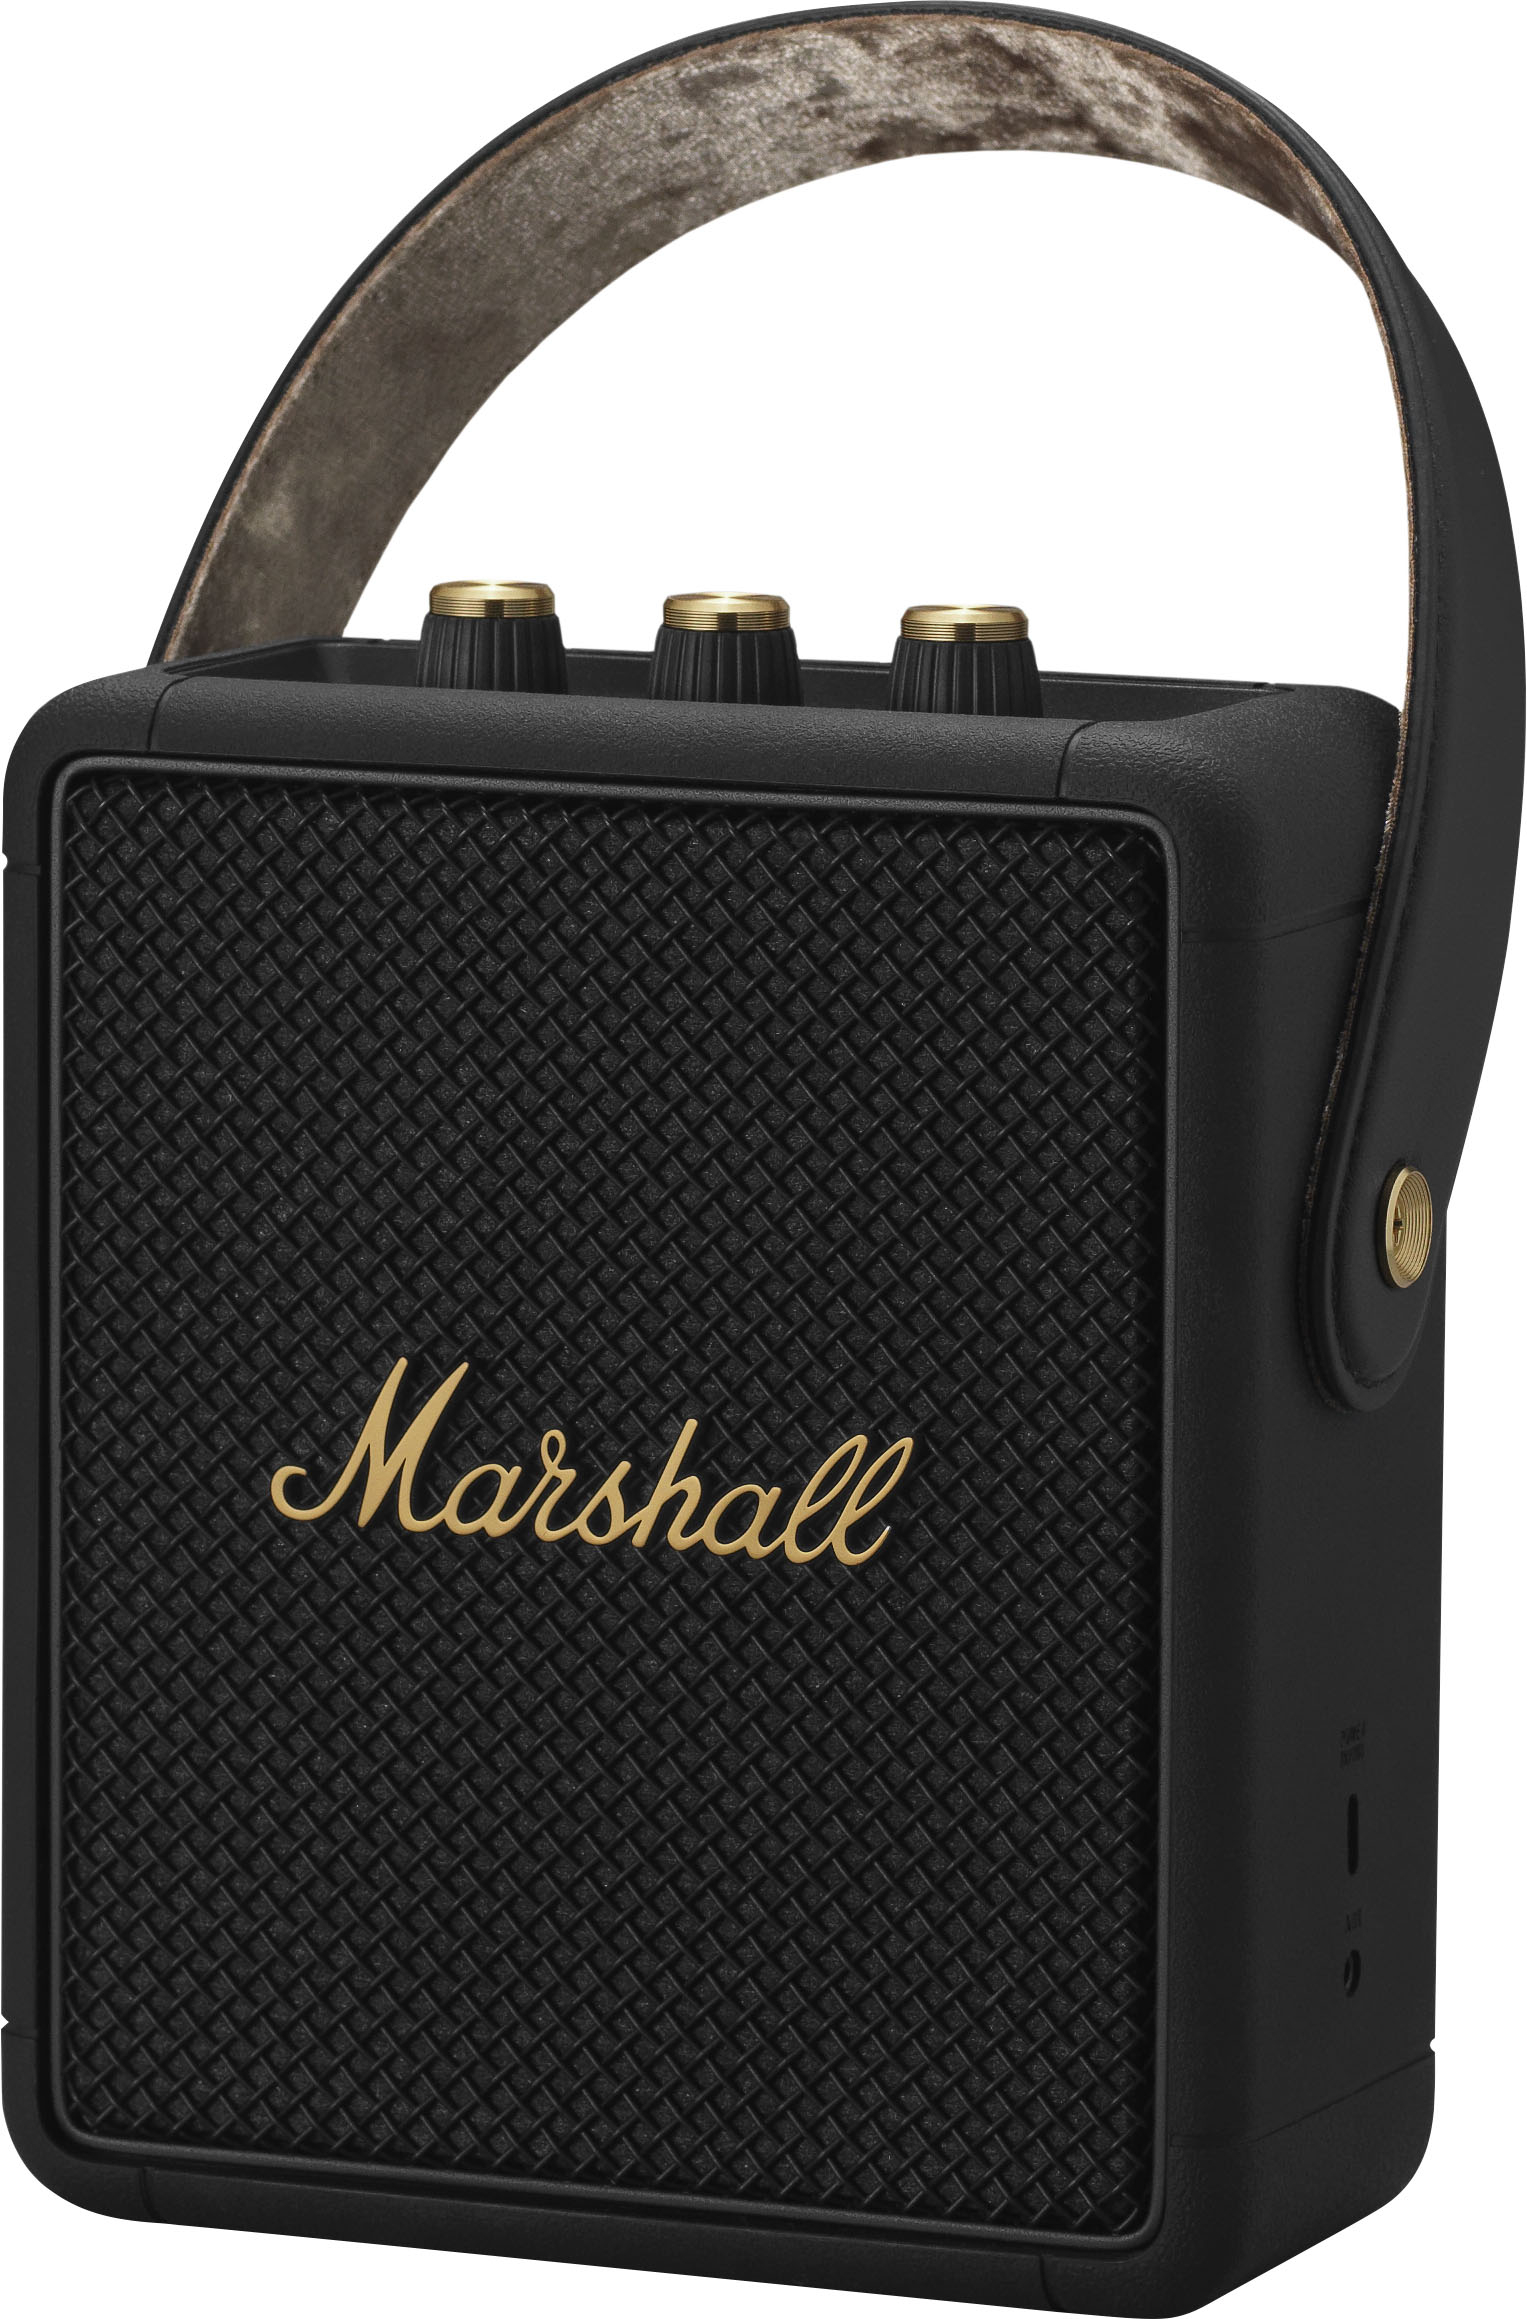 Marshall Stockwell II Portable Bluetooth Speaker Black/Brass